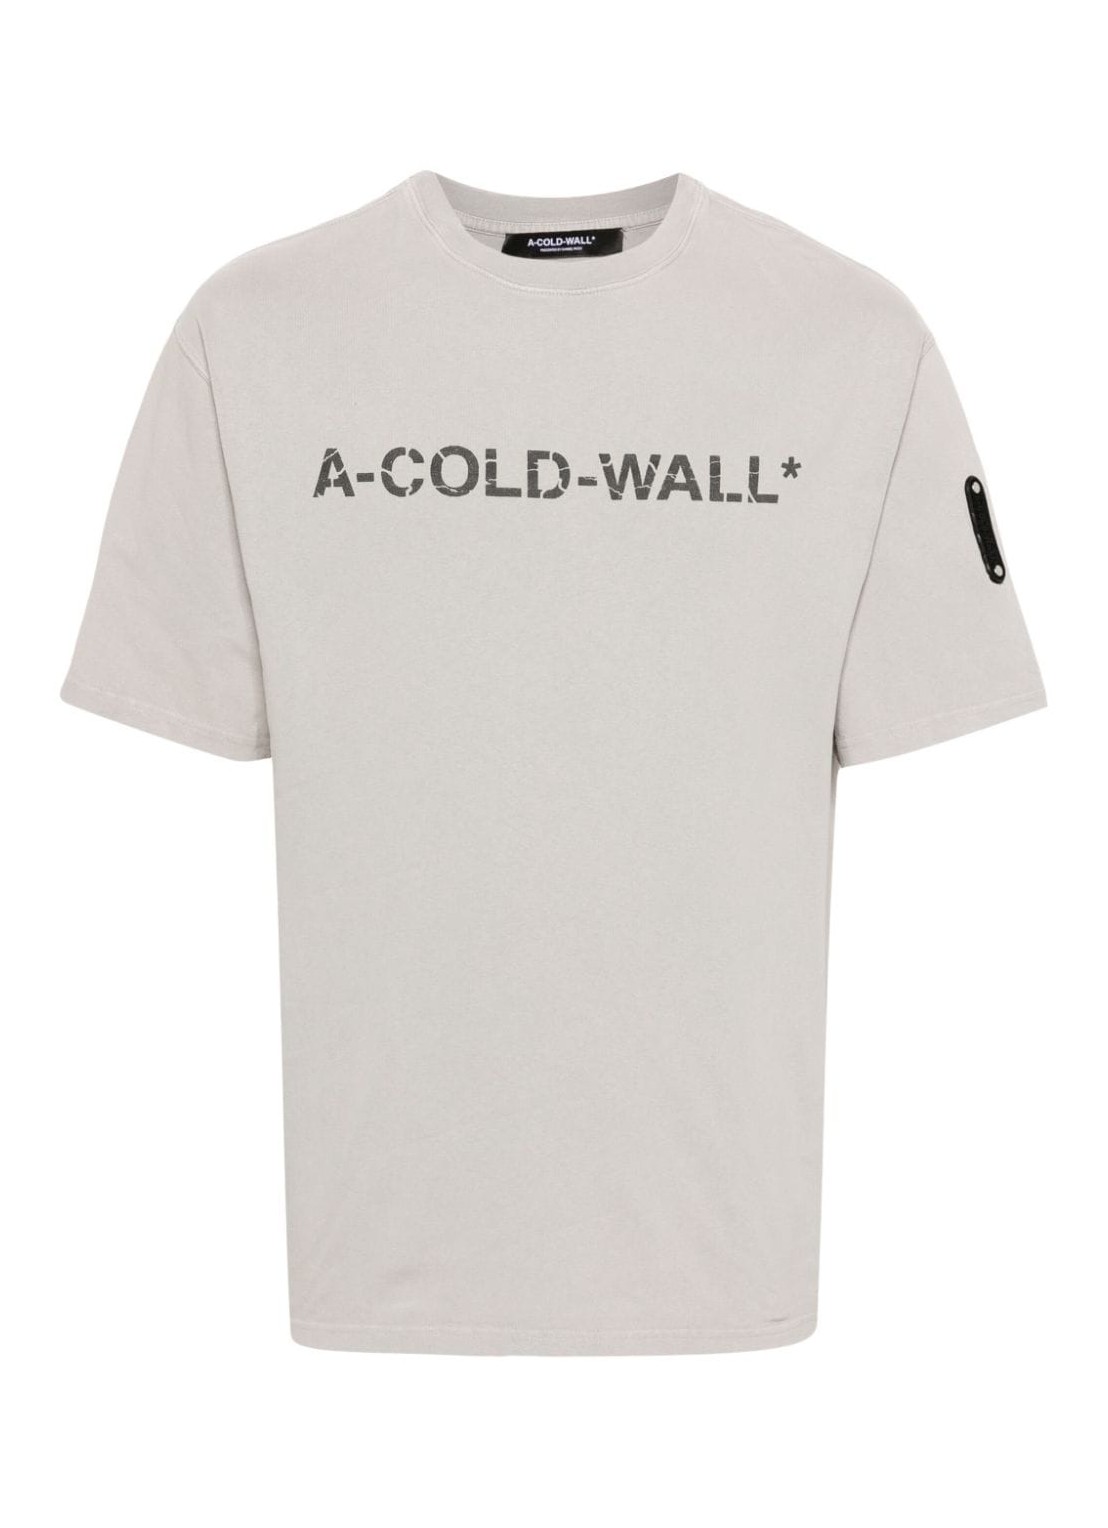 Camiseta a-cold-wall* t-shirt man overdye logo t-shirt acwmts186 cement cemt talla L
 